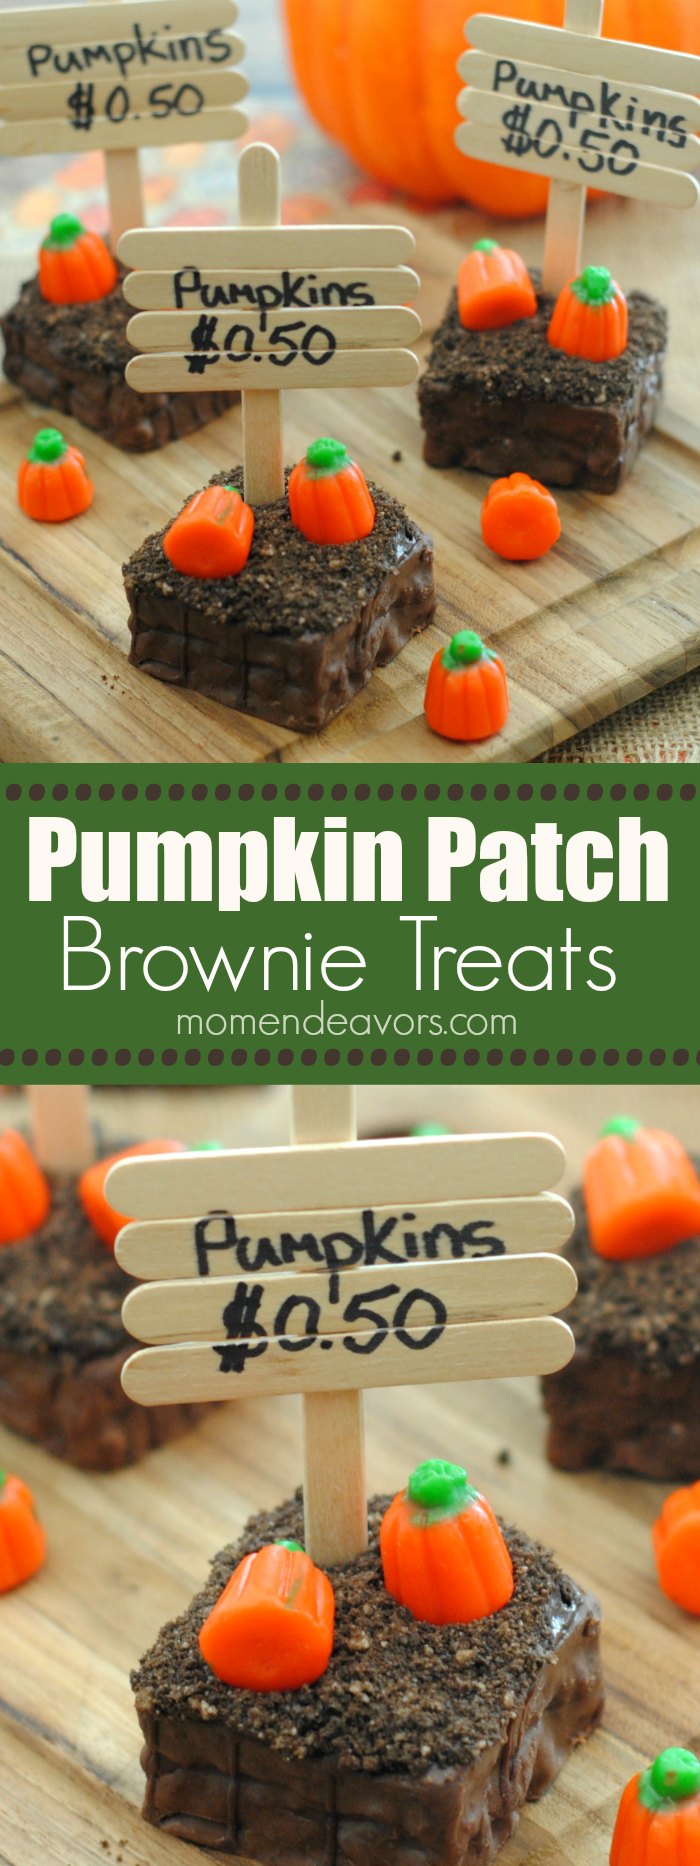 Pumpkin Patch Brownies